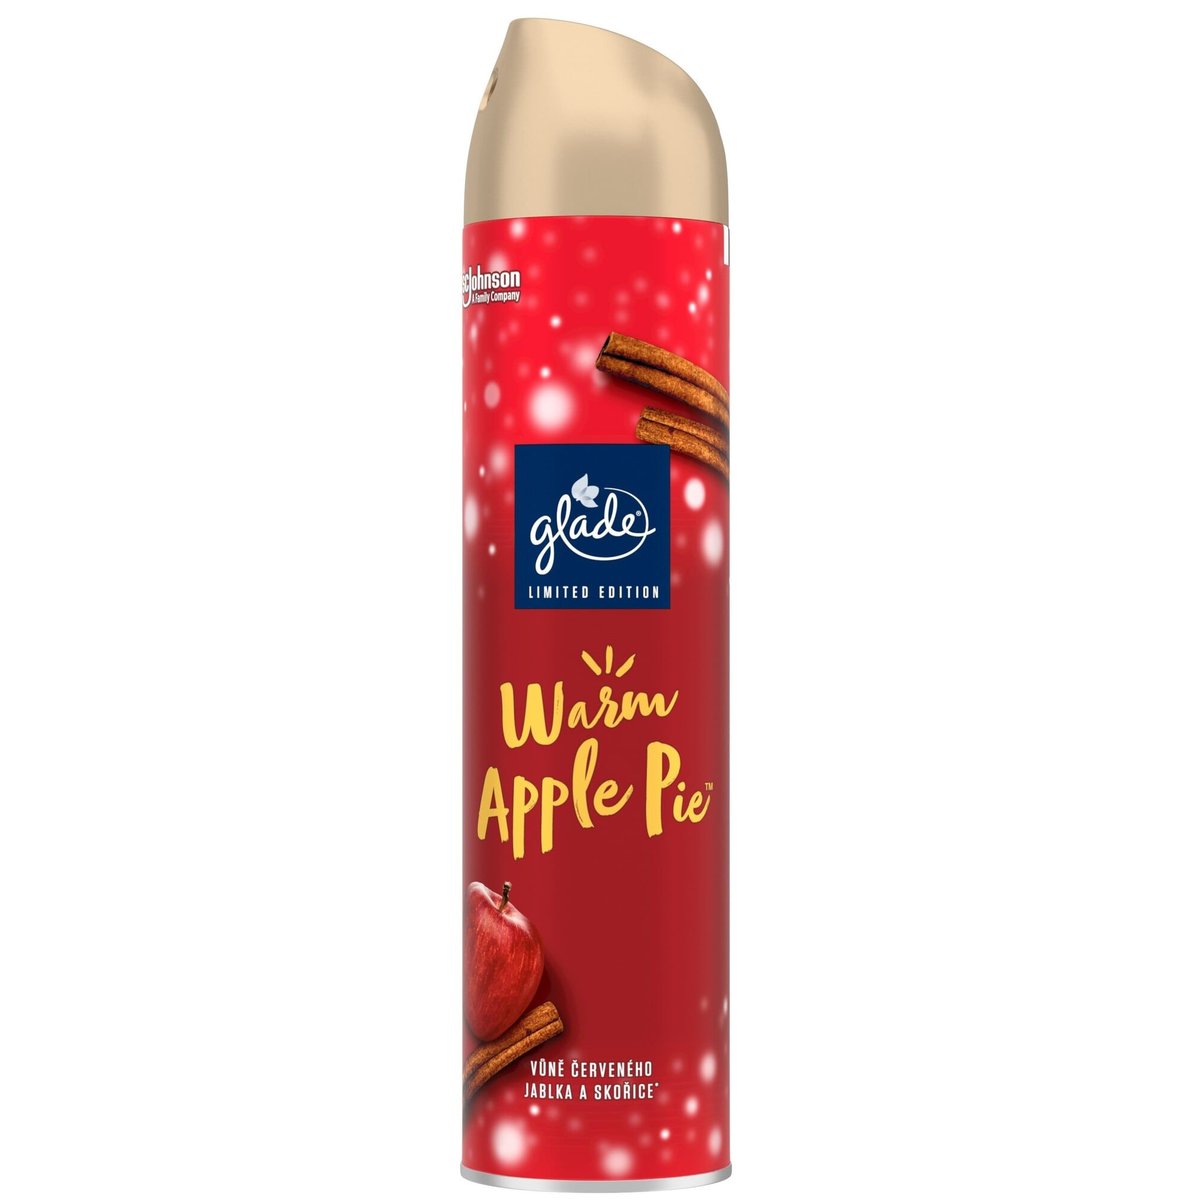 Glade Warm Apple Pie aerosol